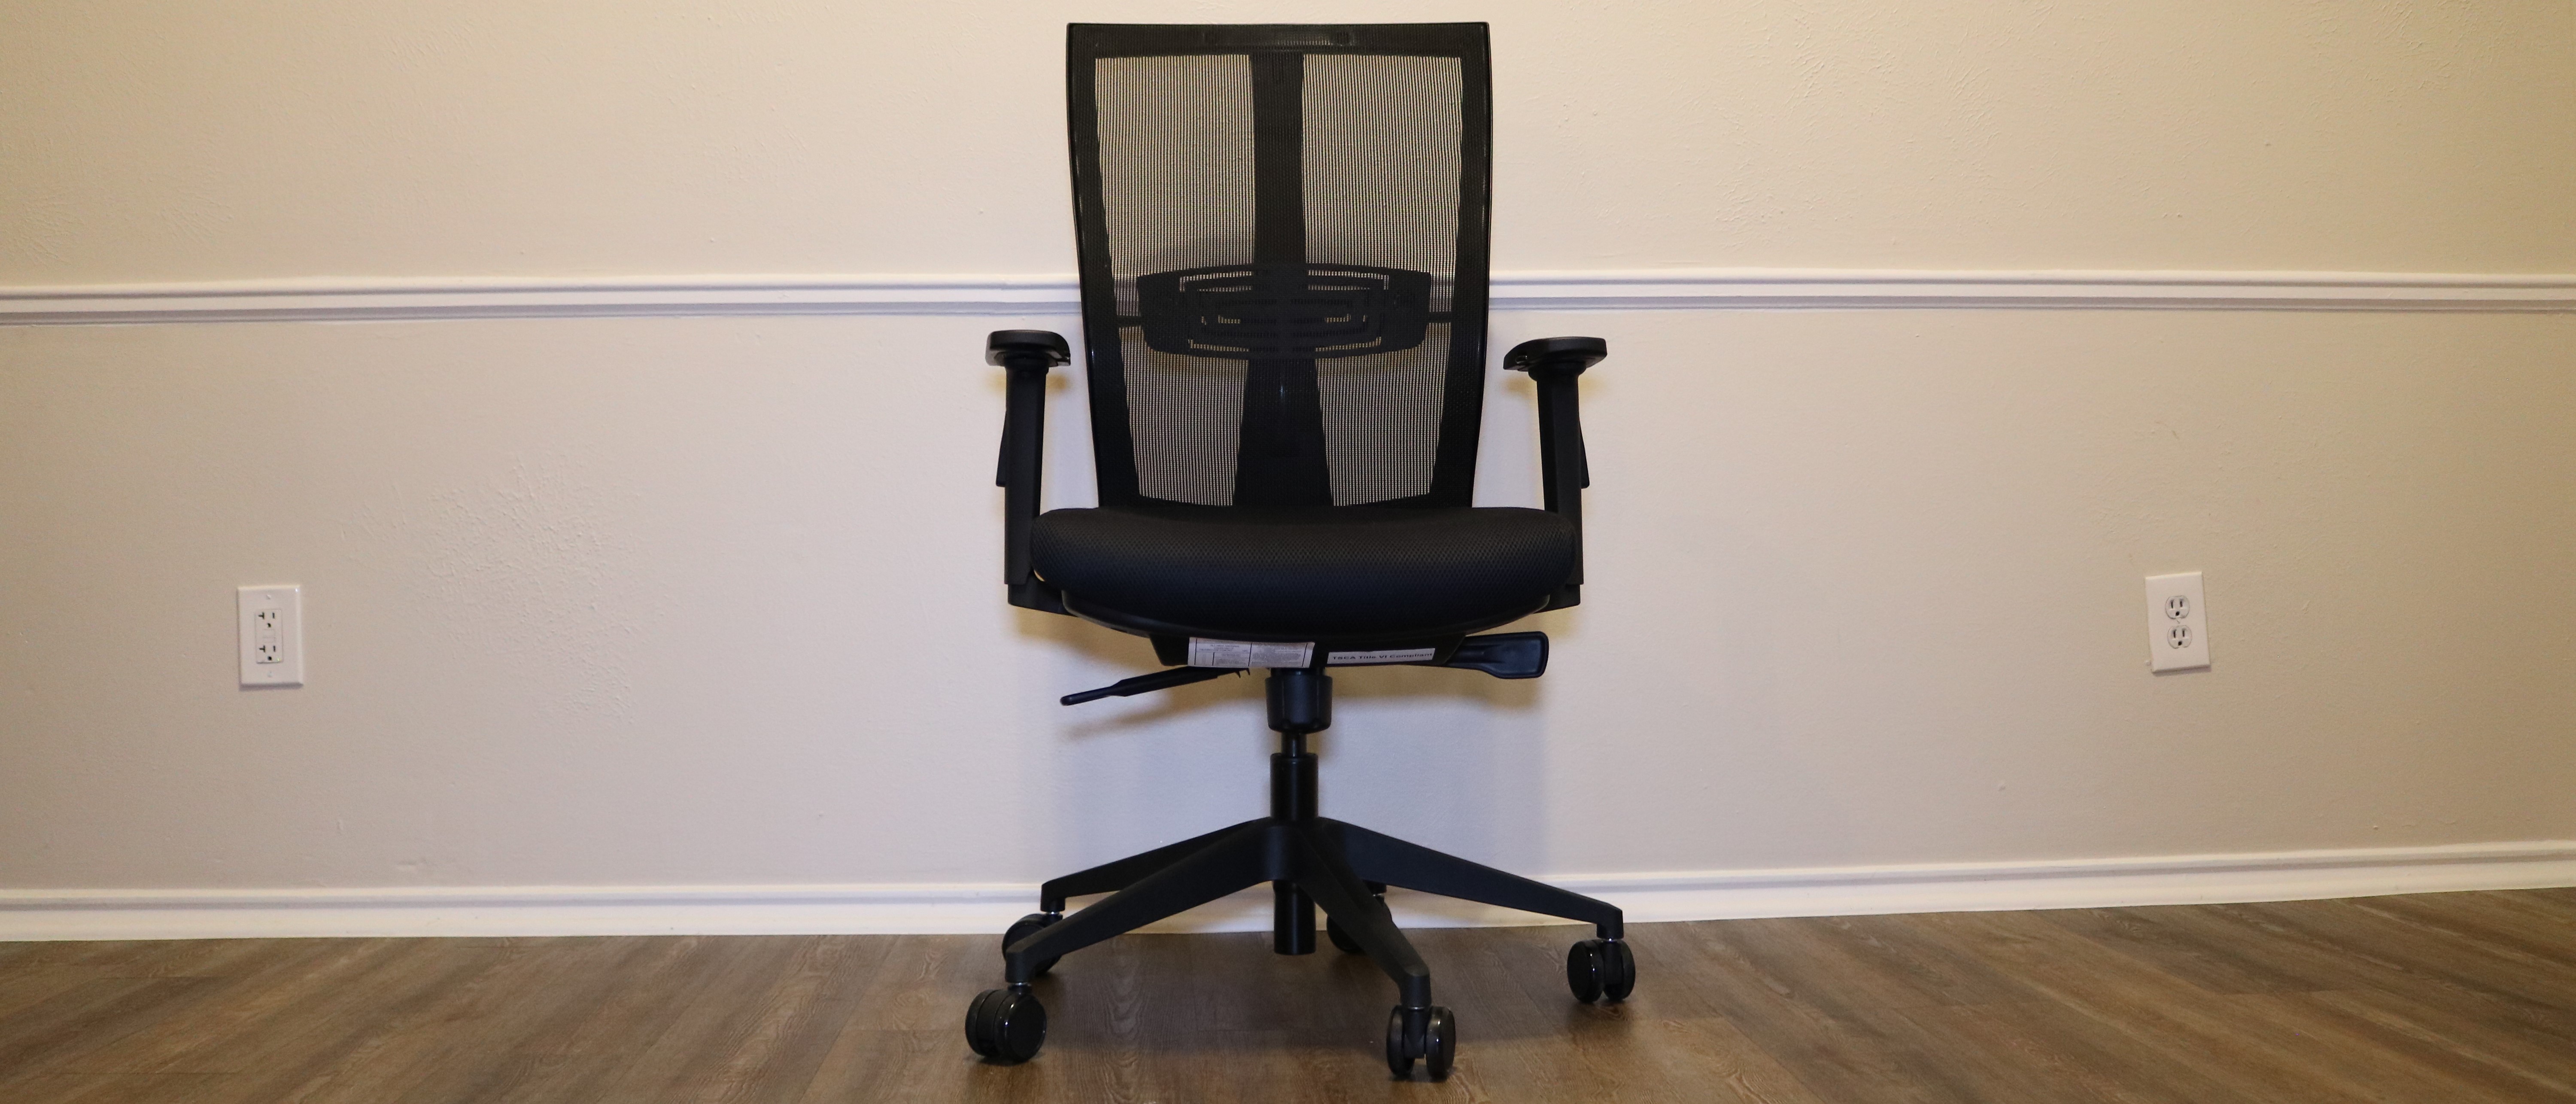 Razzor Ergonomic Office Chair, High Back Mesh Desk Chair with